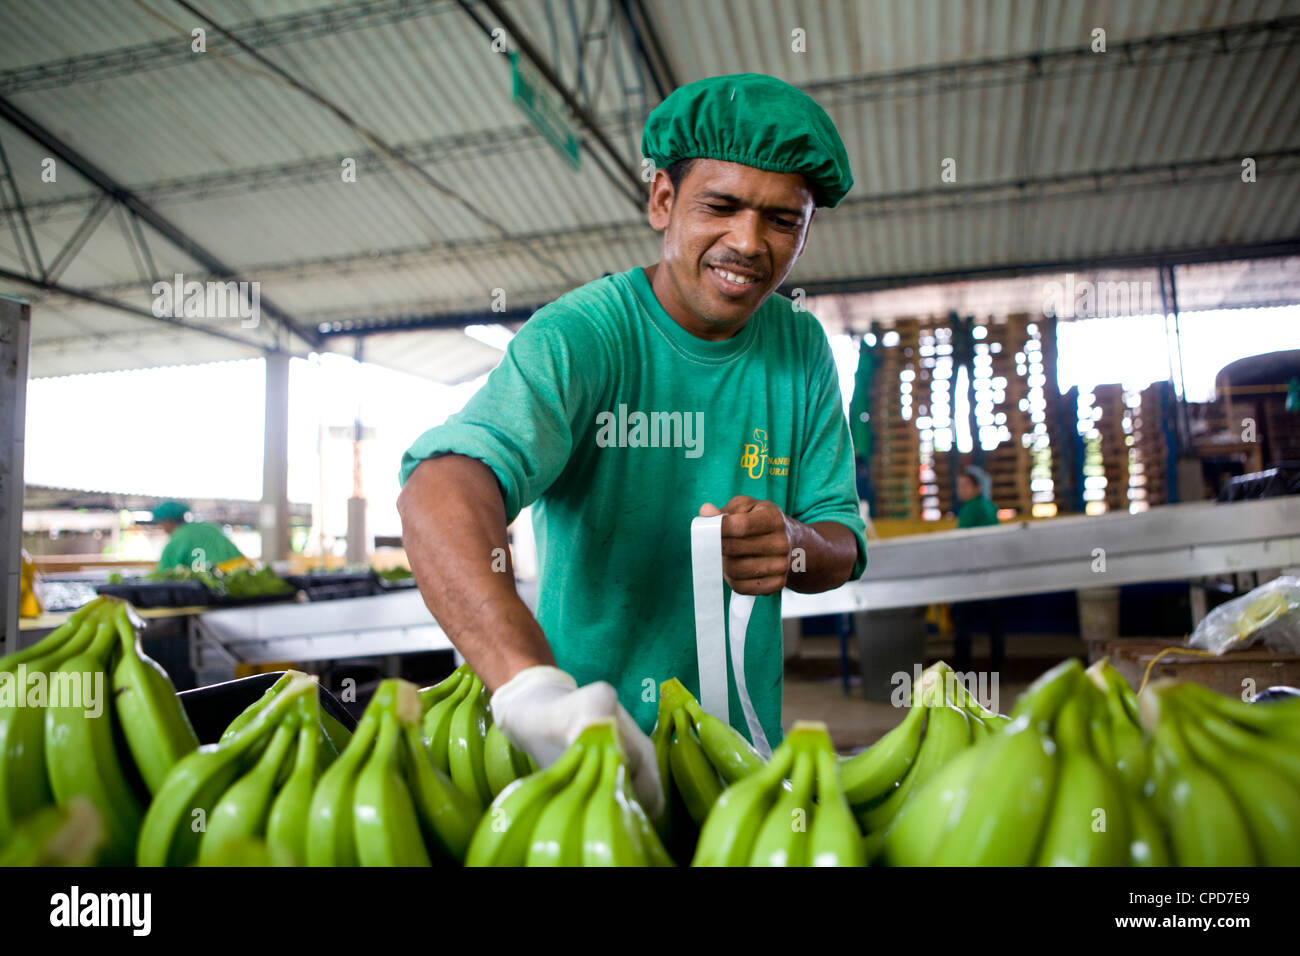 Workers at a Fairtrade banana plantation wash and package banana bunches Stock Photo